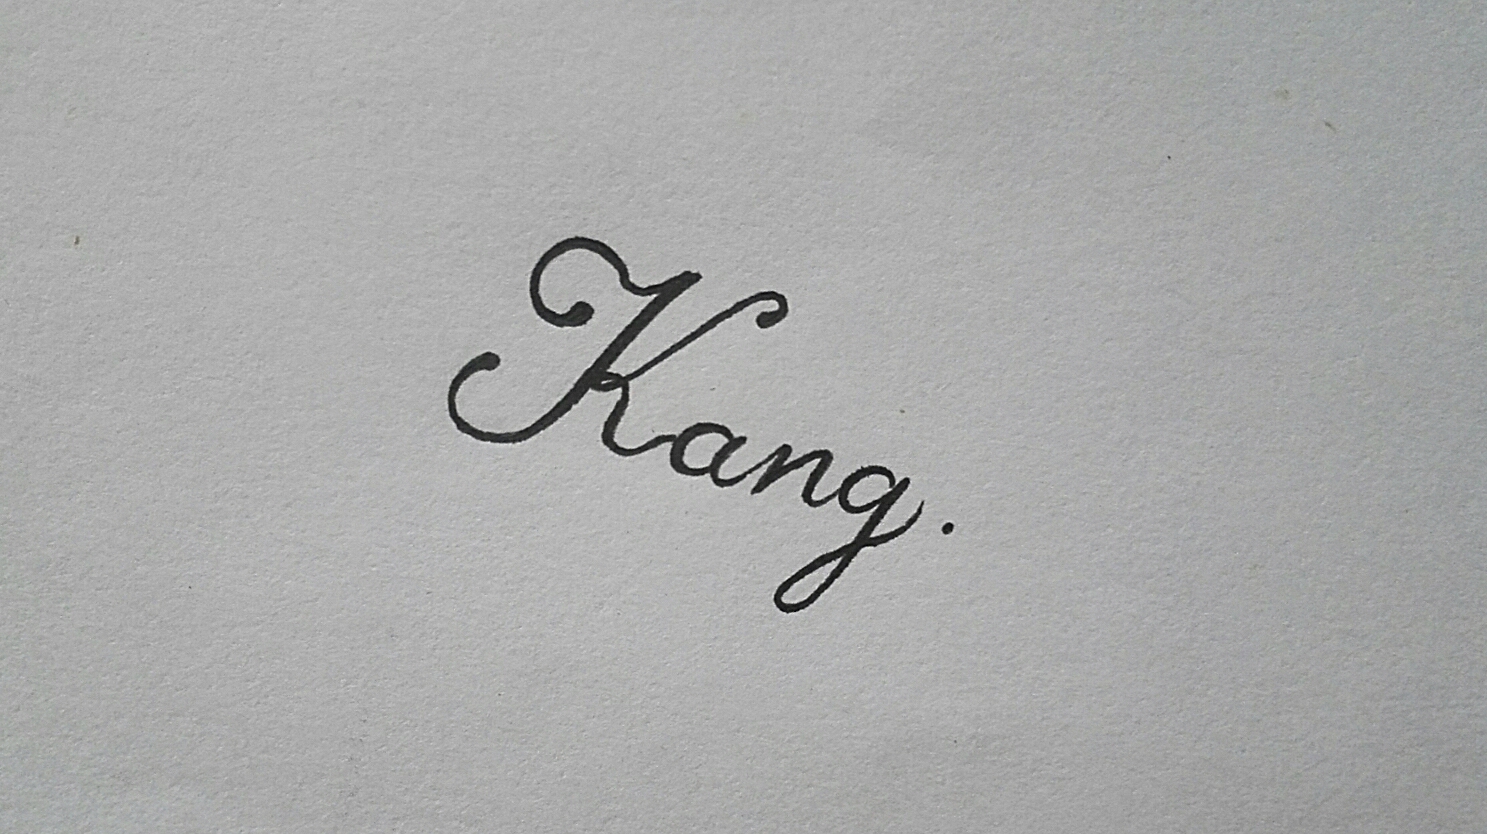 代写『kang』 致:a